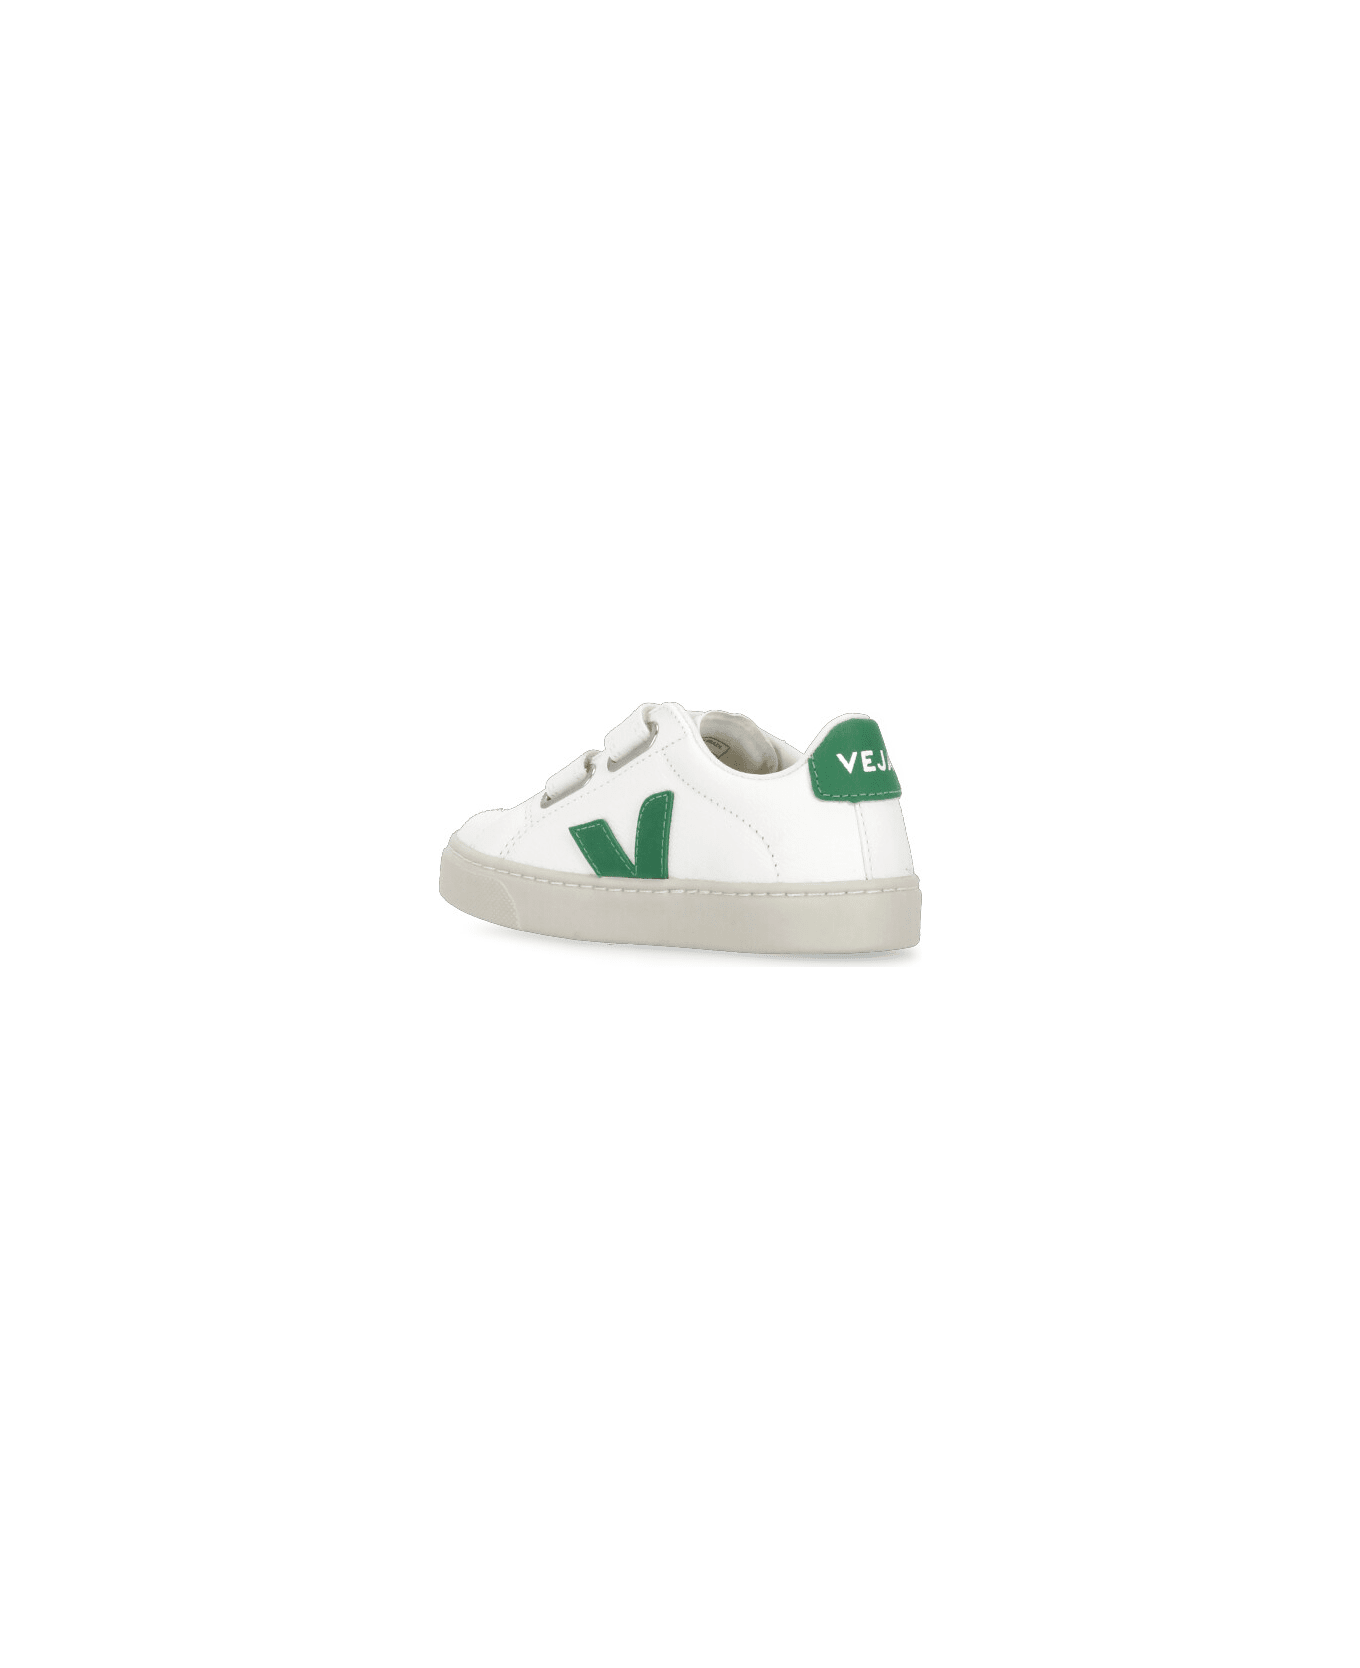 Veja Esplar Sneakers - Green シューズ